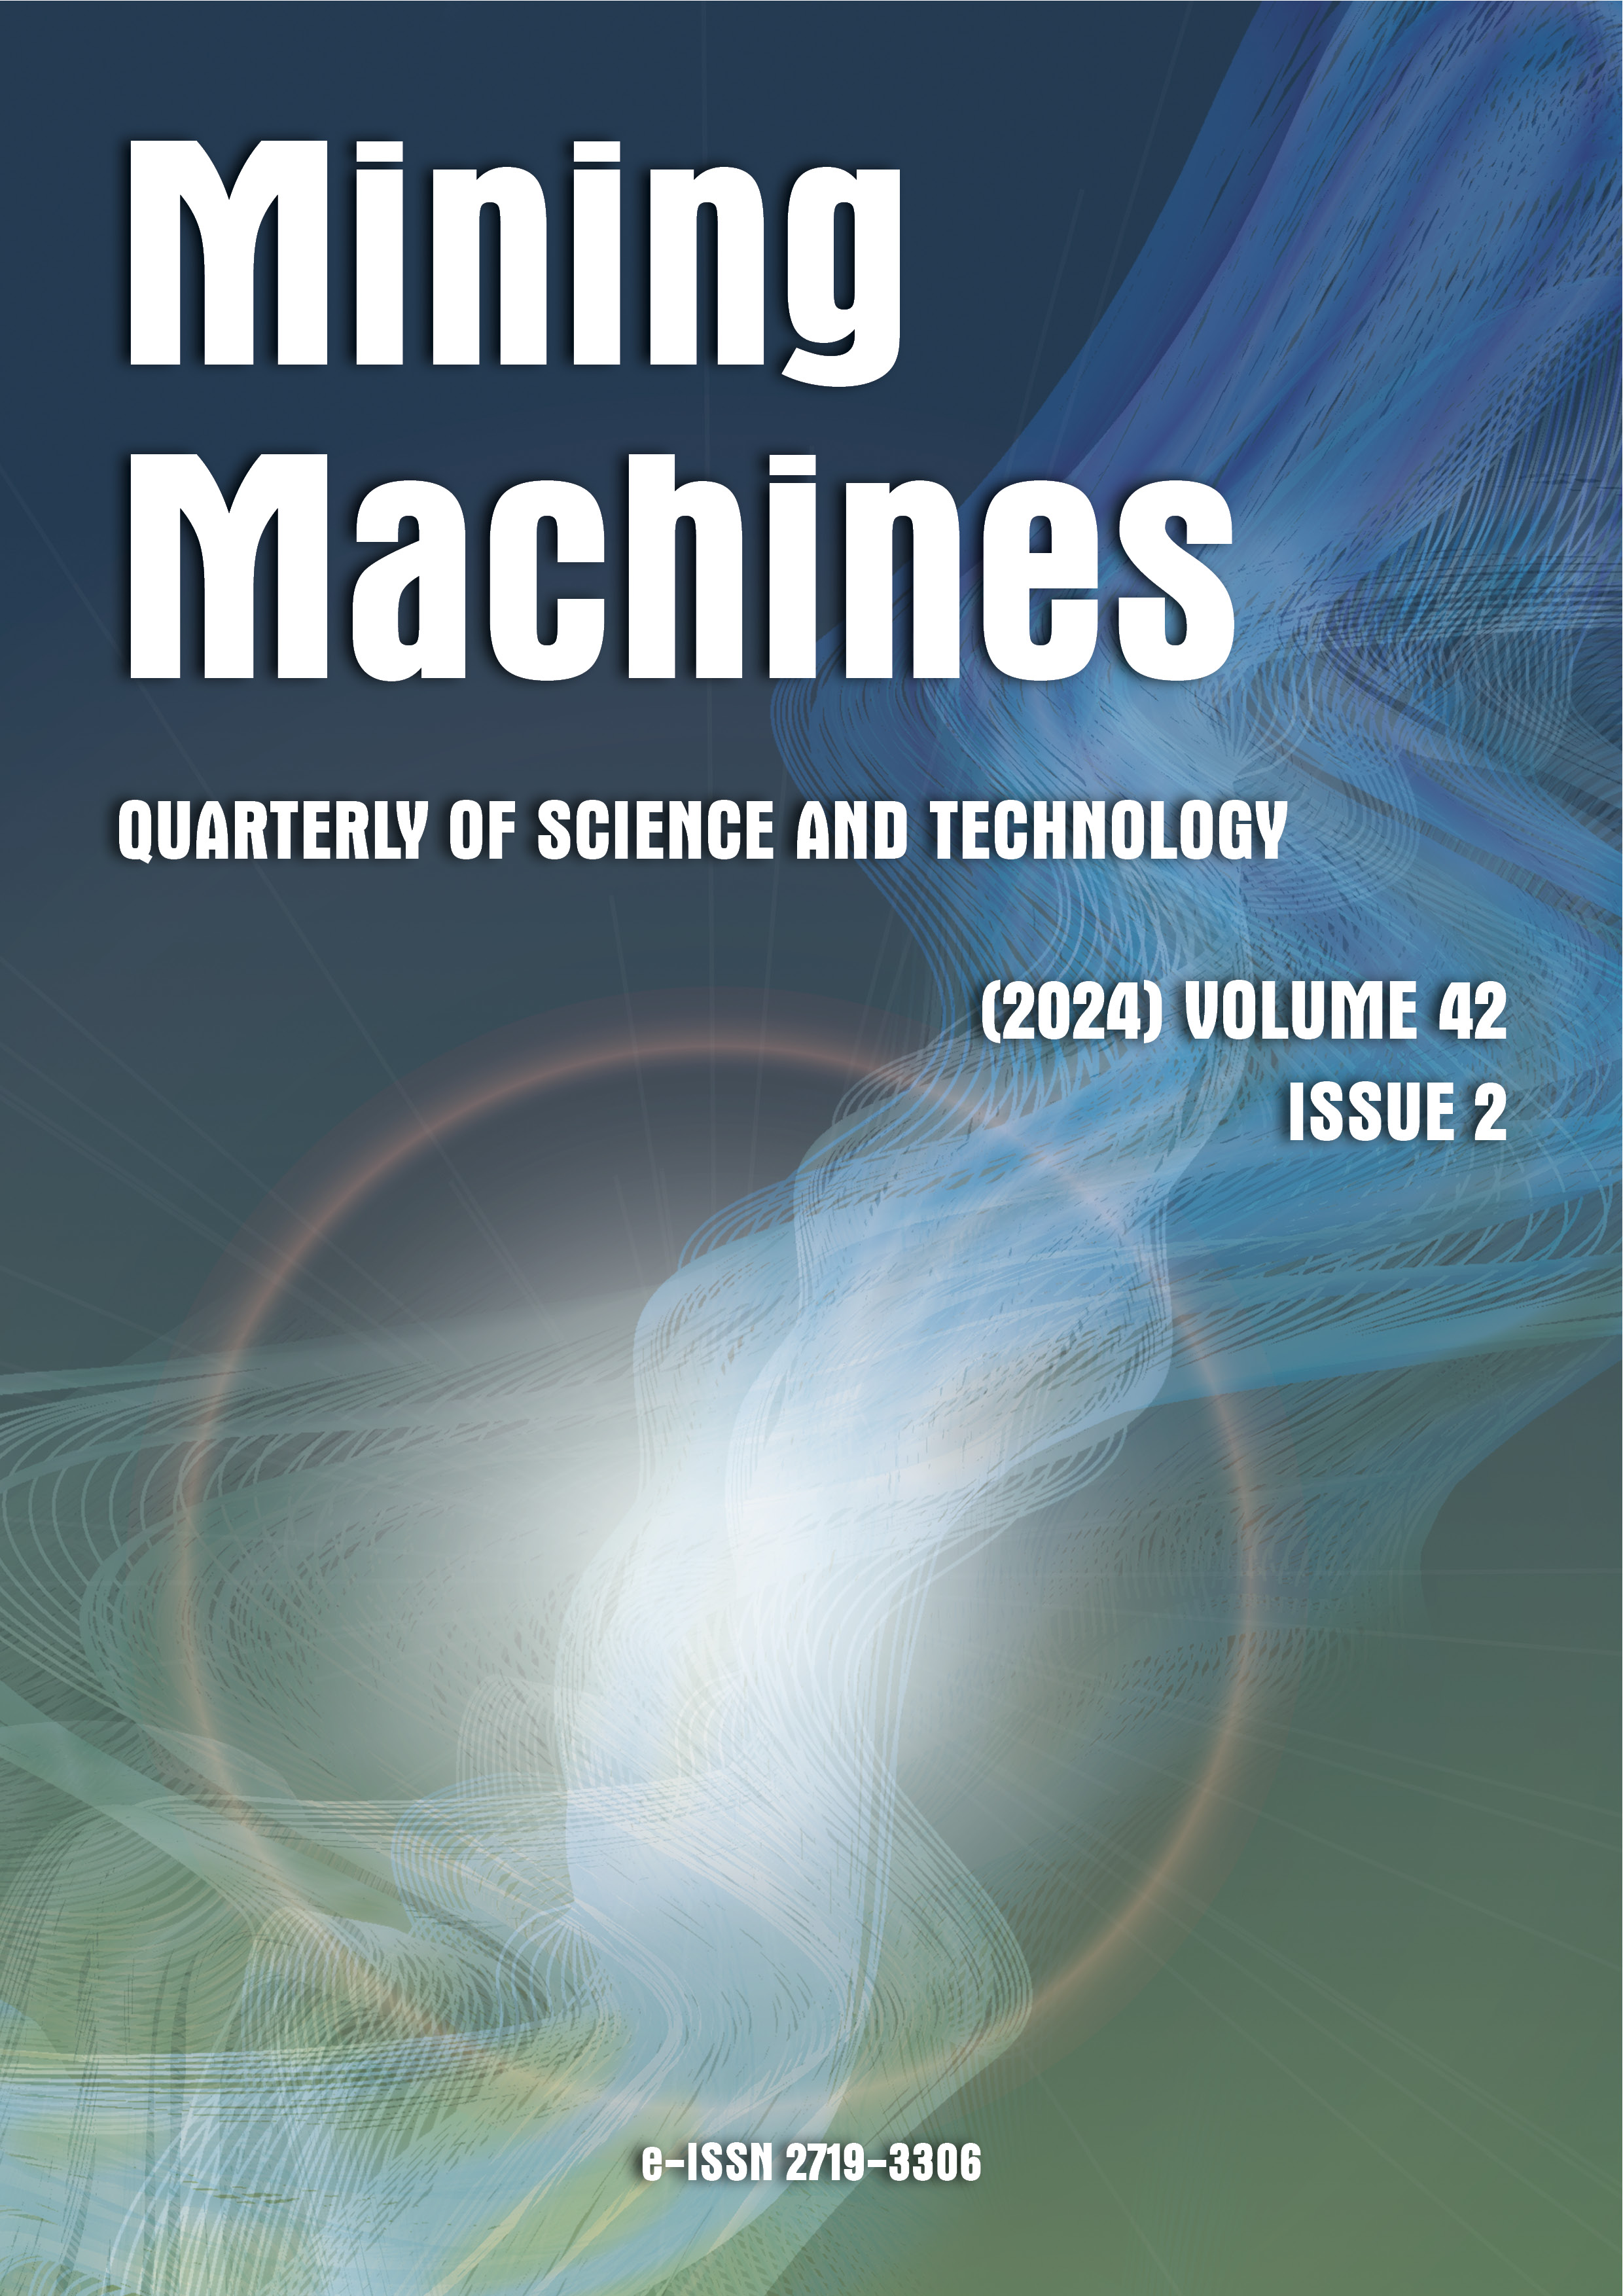 Mining Machines, (2024) Vol. 42, Issue 2